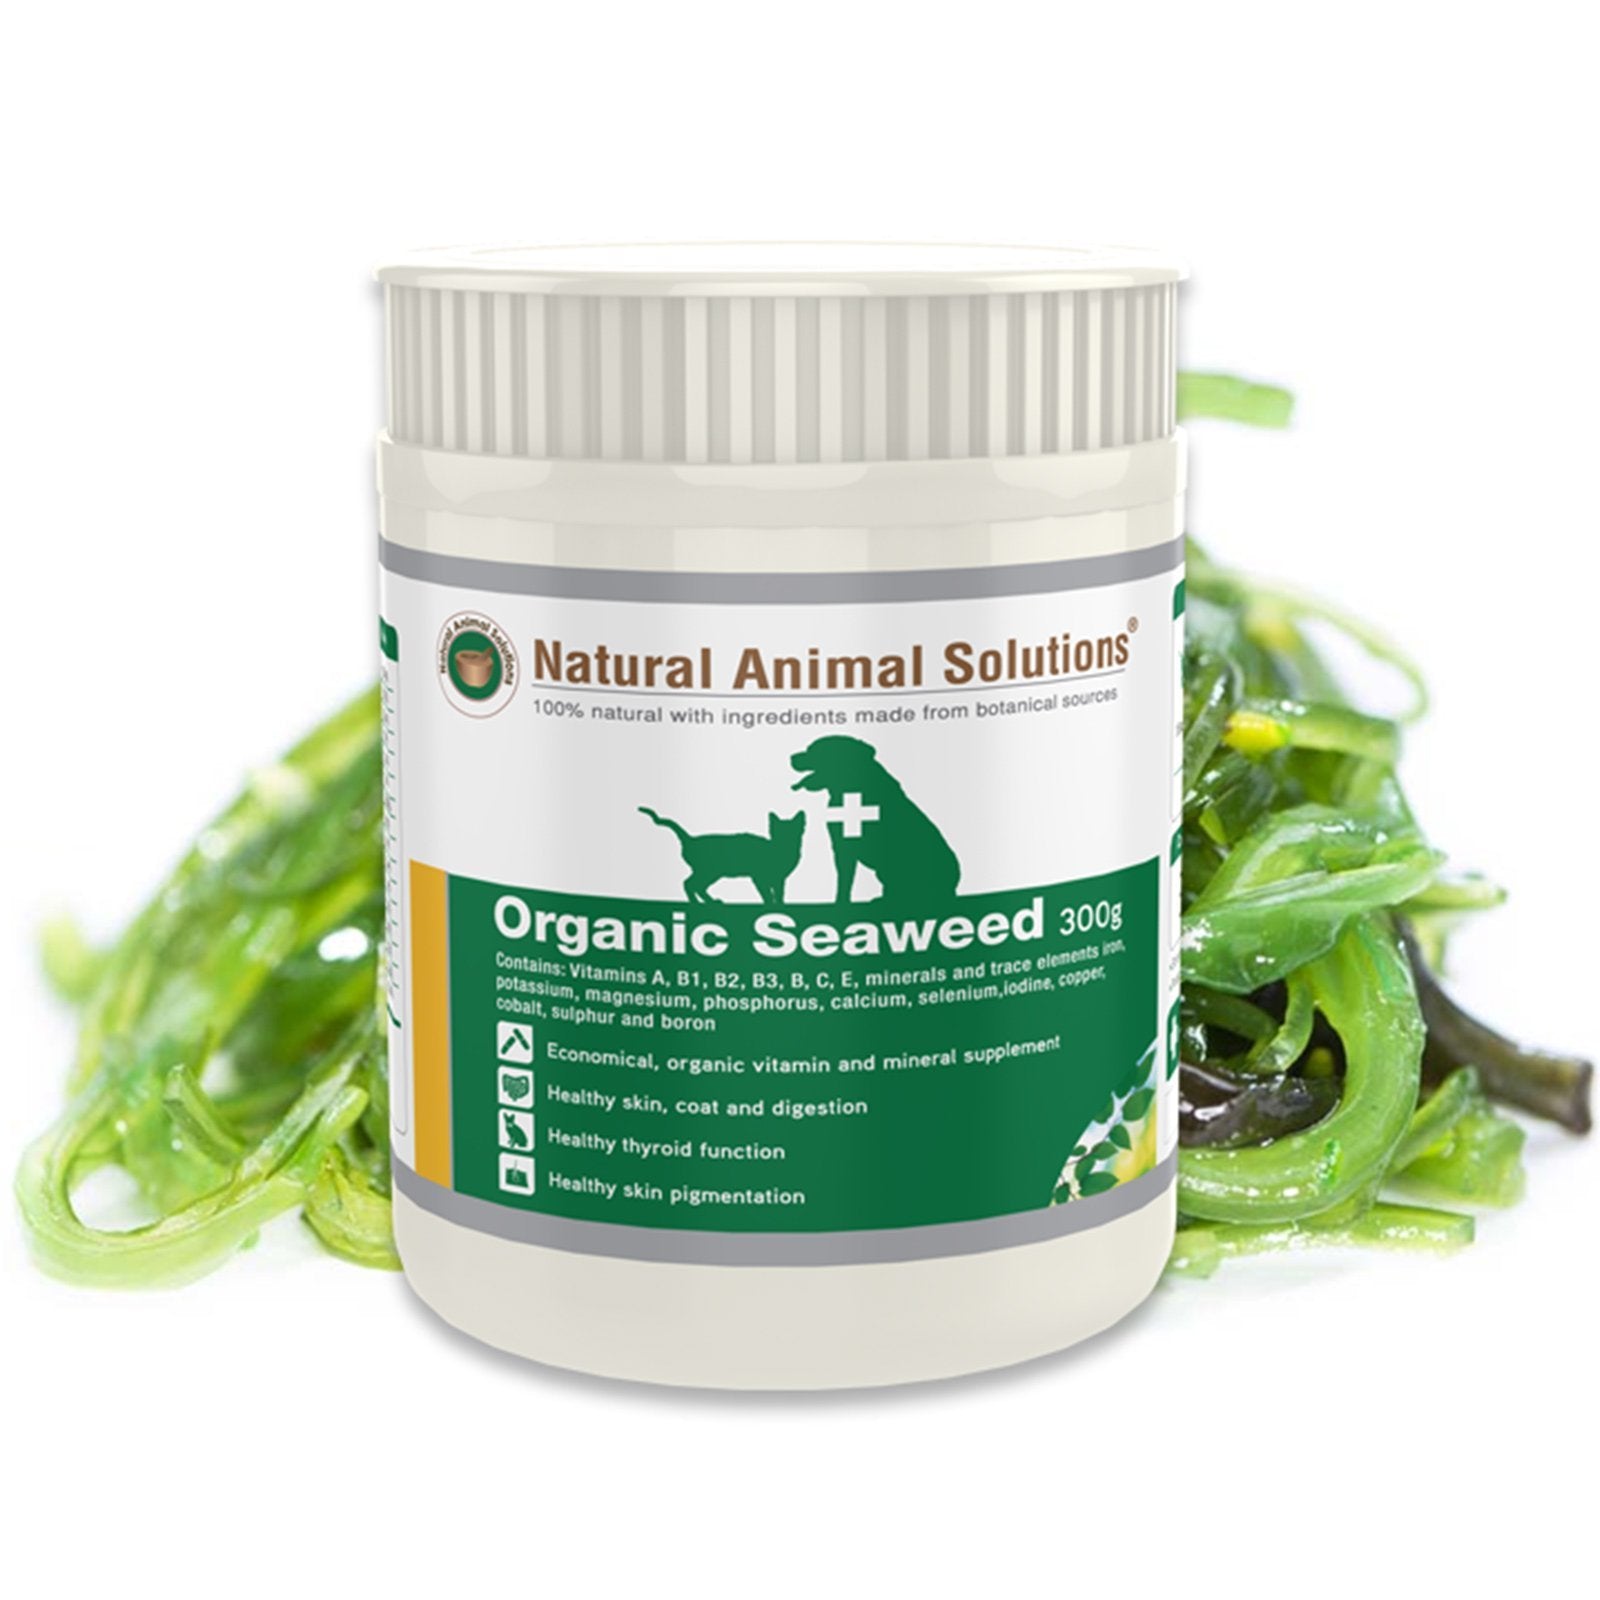 NAS Organic Seaweed天然有機海藻粉